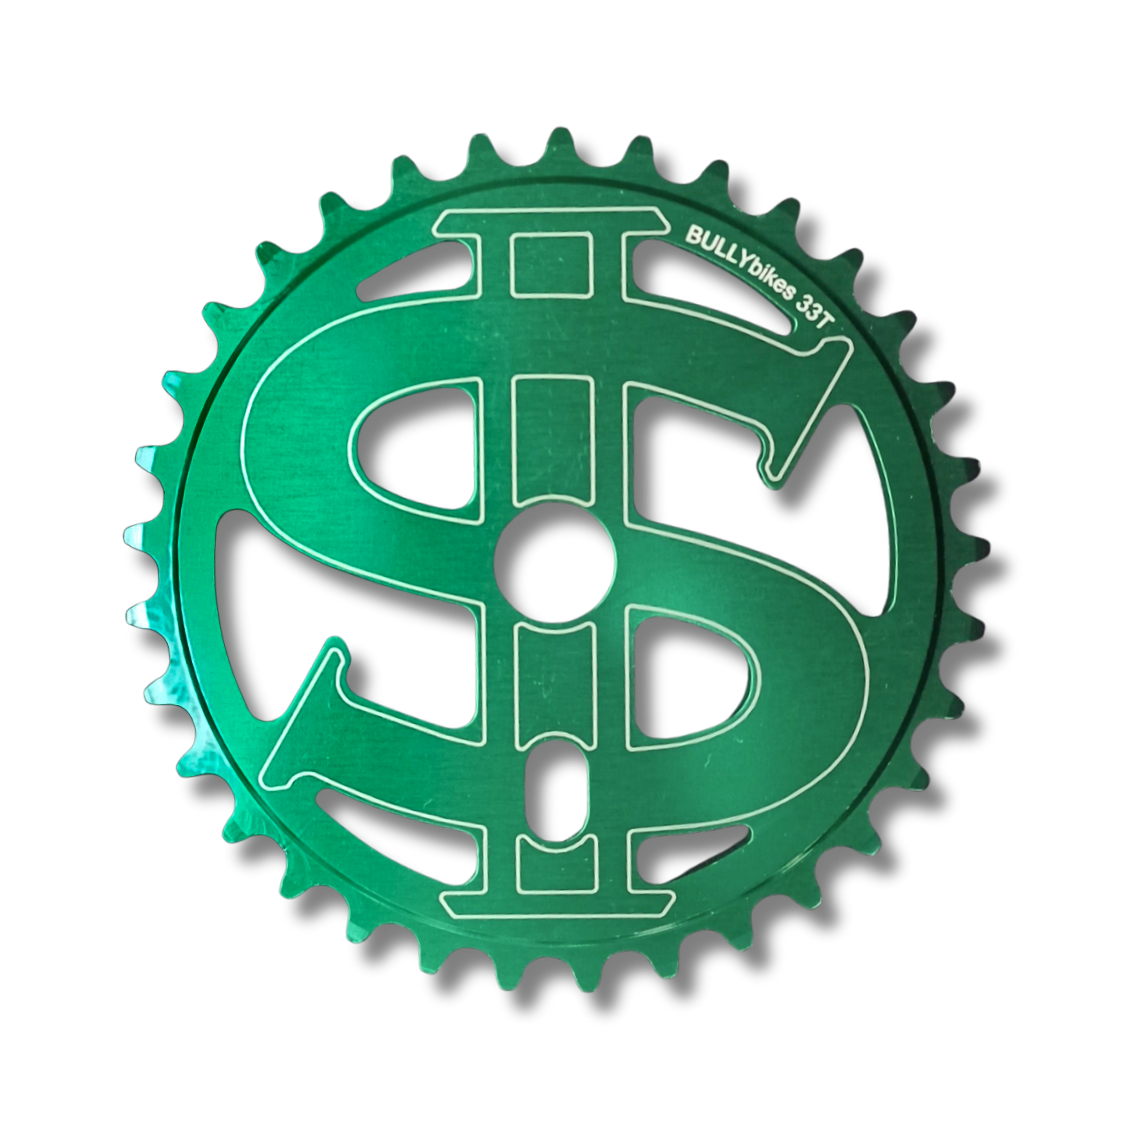 Bully Big Money 33t BMX Sprocket / Chainwheel - Green - USA Made